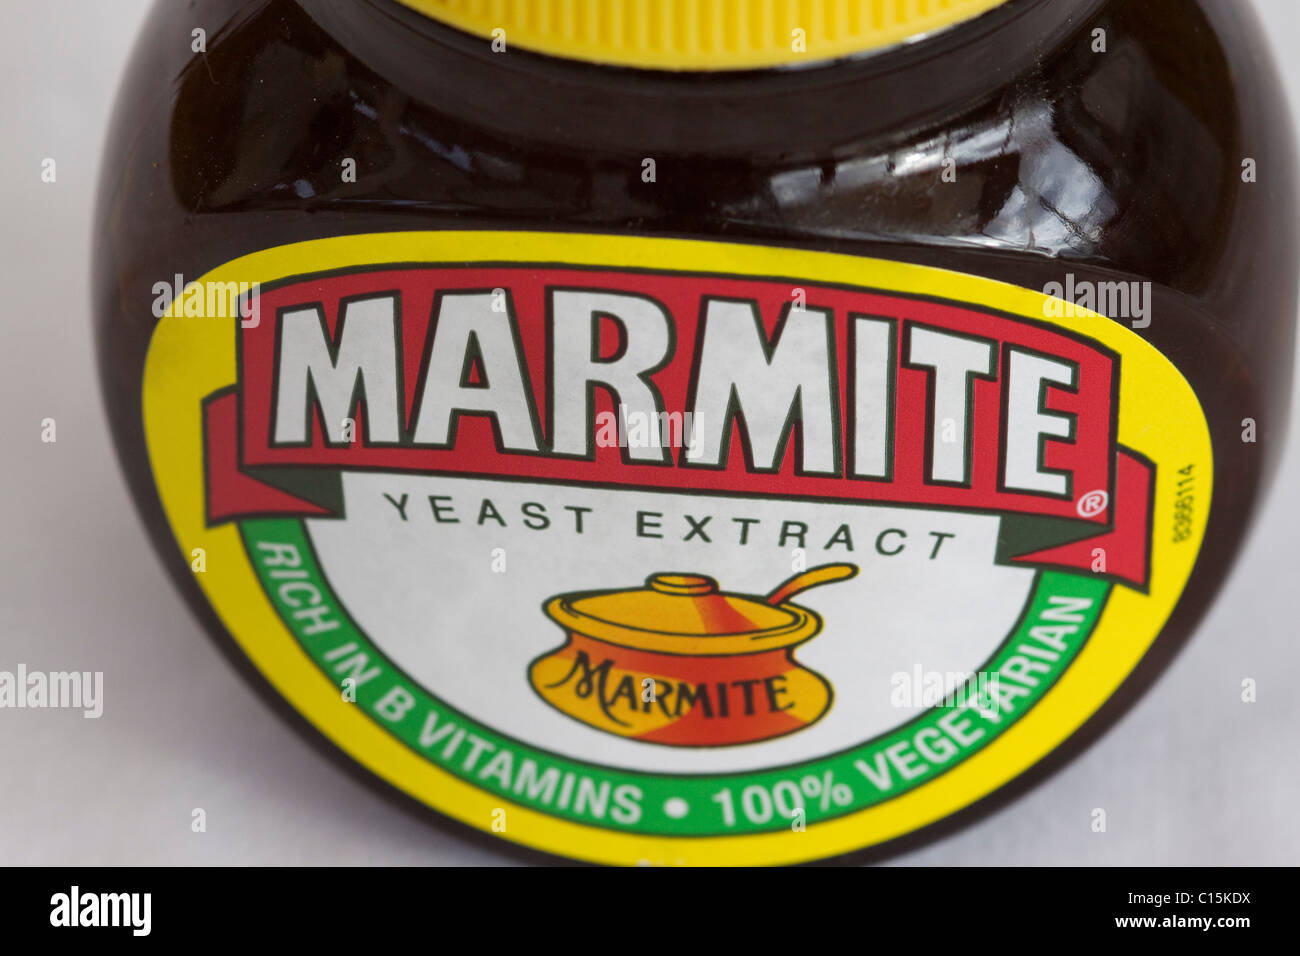 A Jar of British Marmite on white Stock Photo